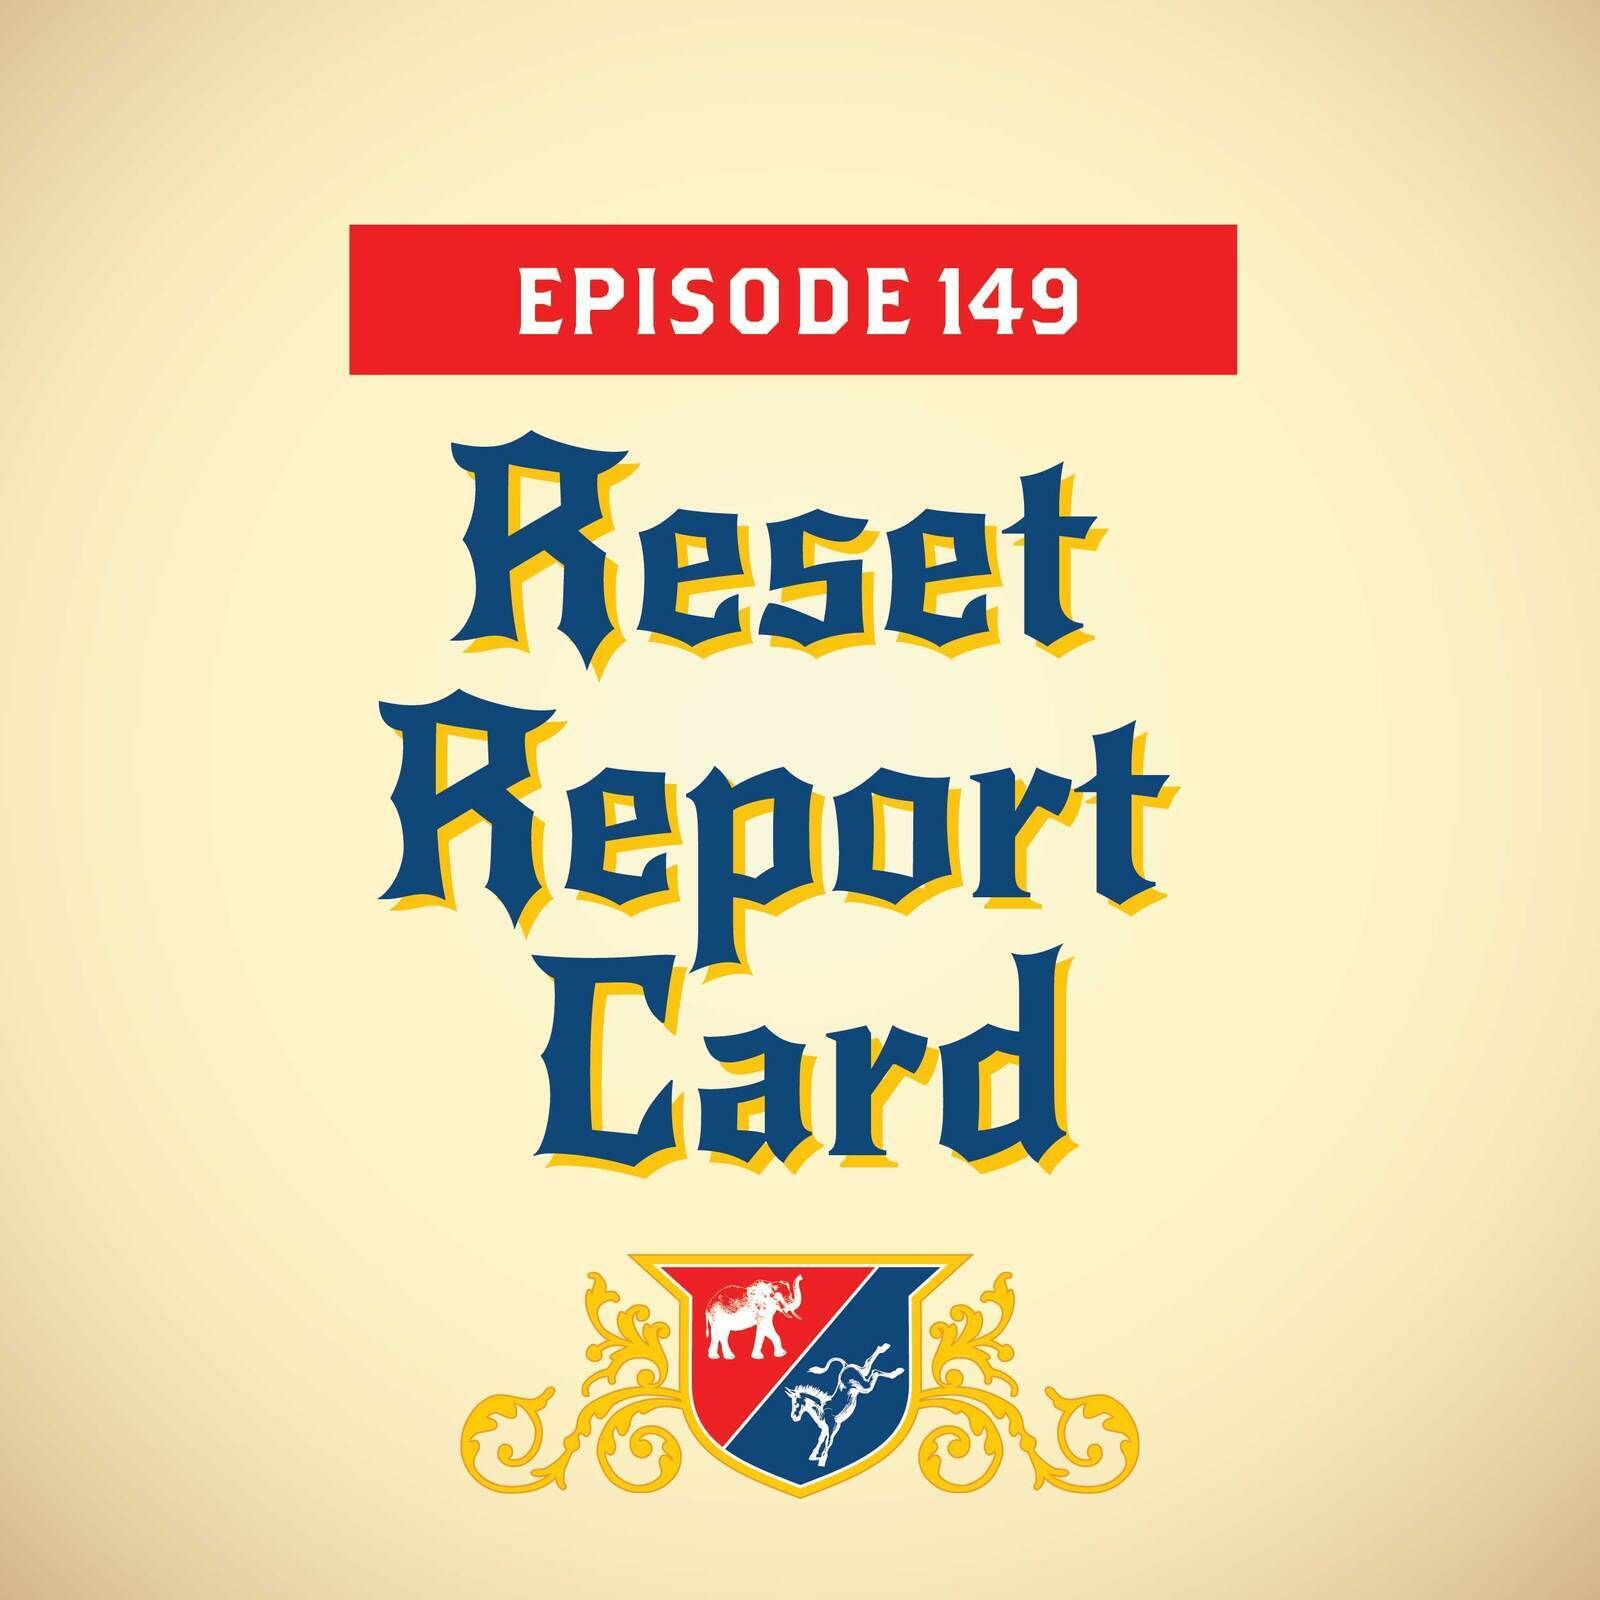 Reset Report Card (with Jennifer Palmieri)